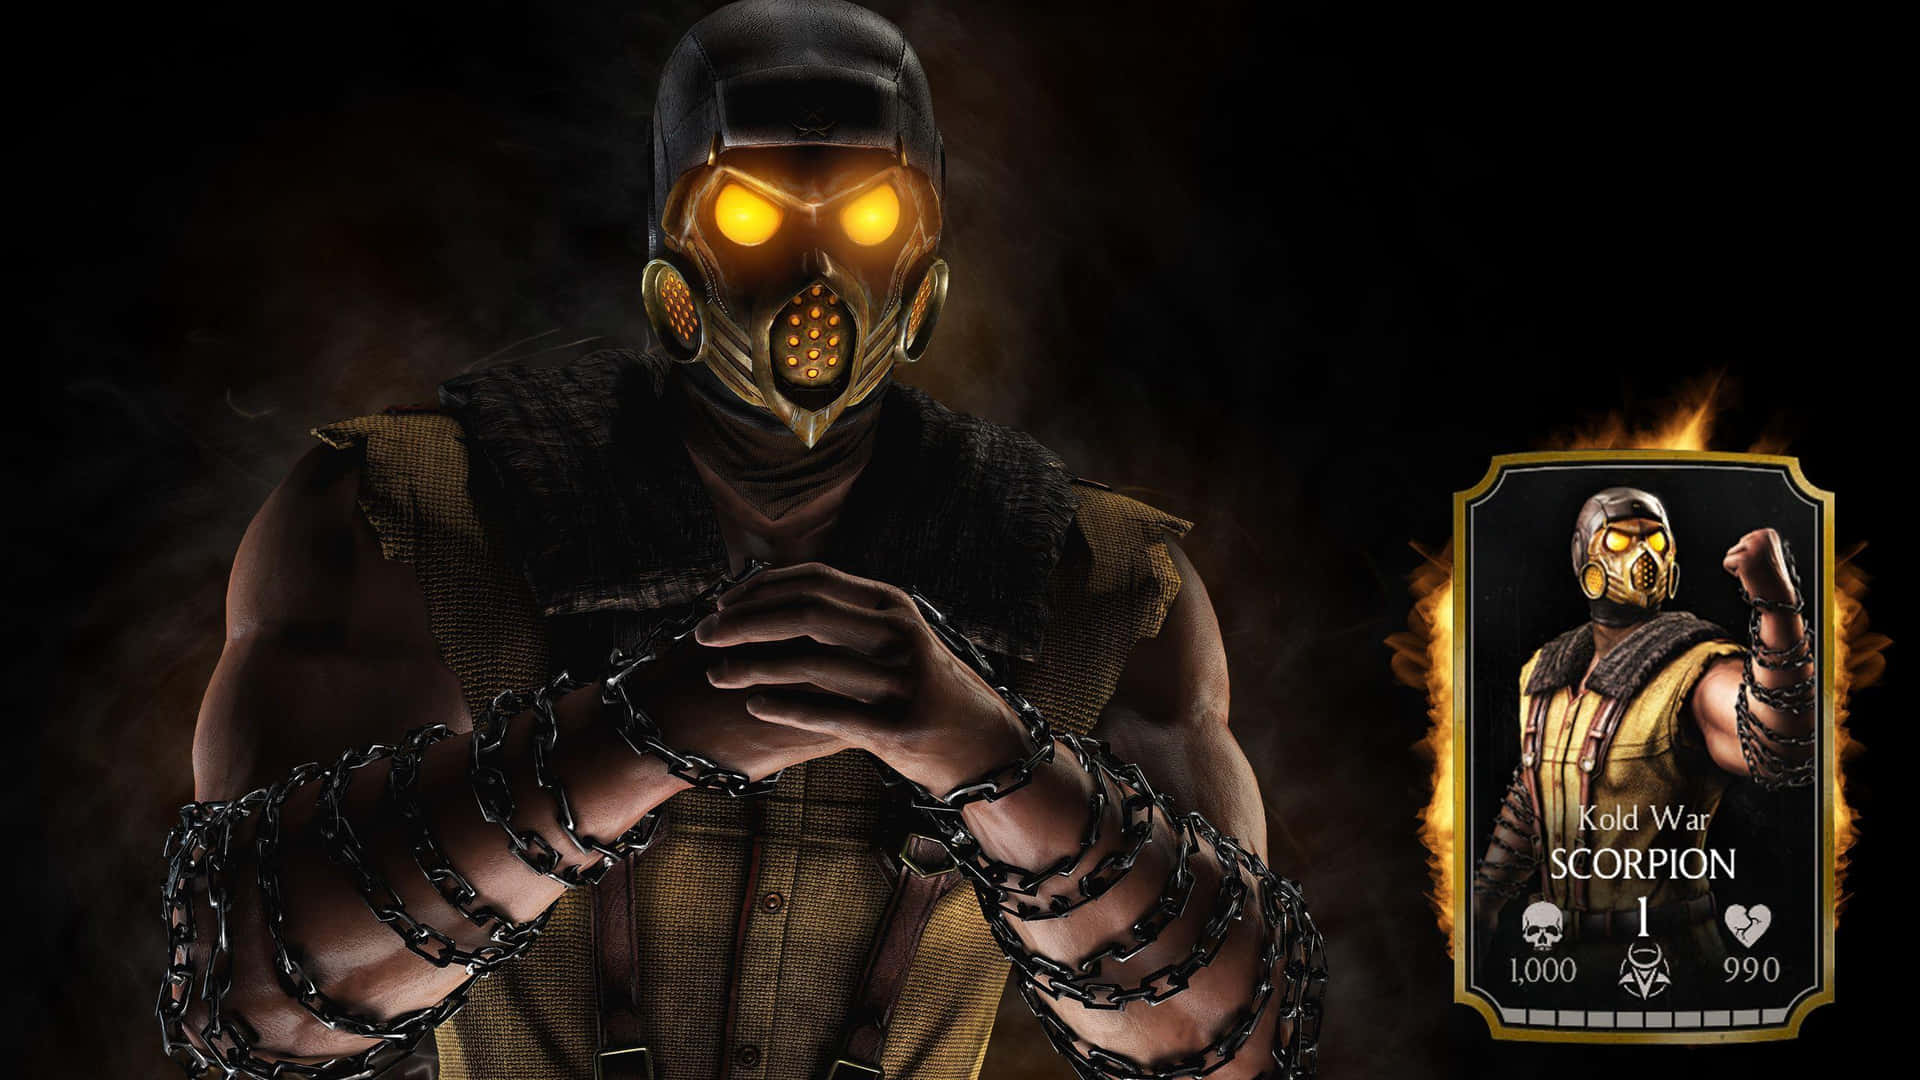 Epic Mortal Kombat X Battle Featuring Scorpion And Sub-zero Background